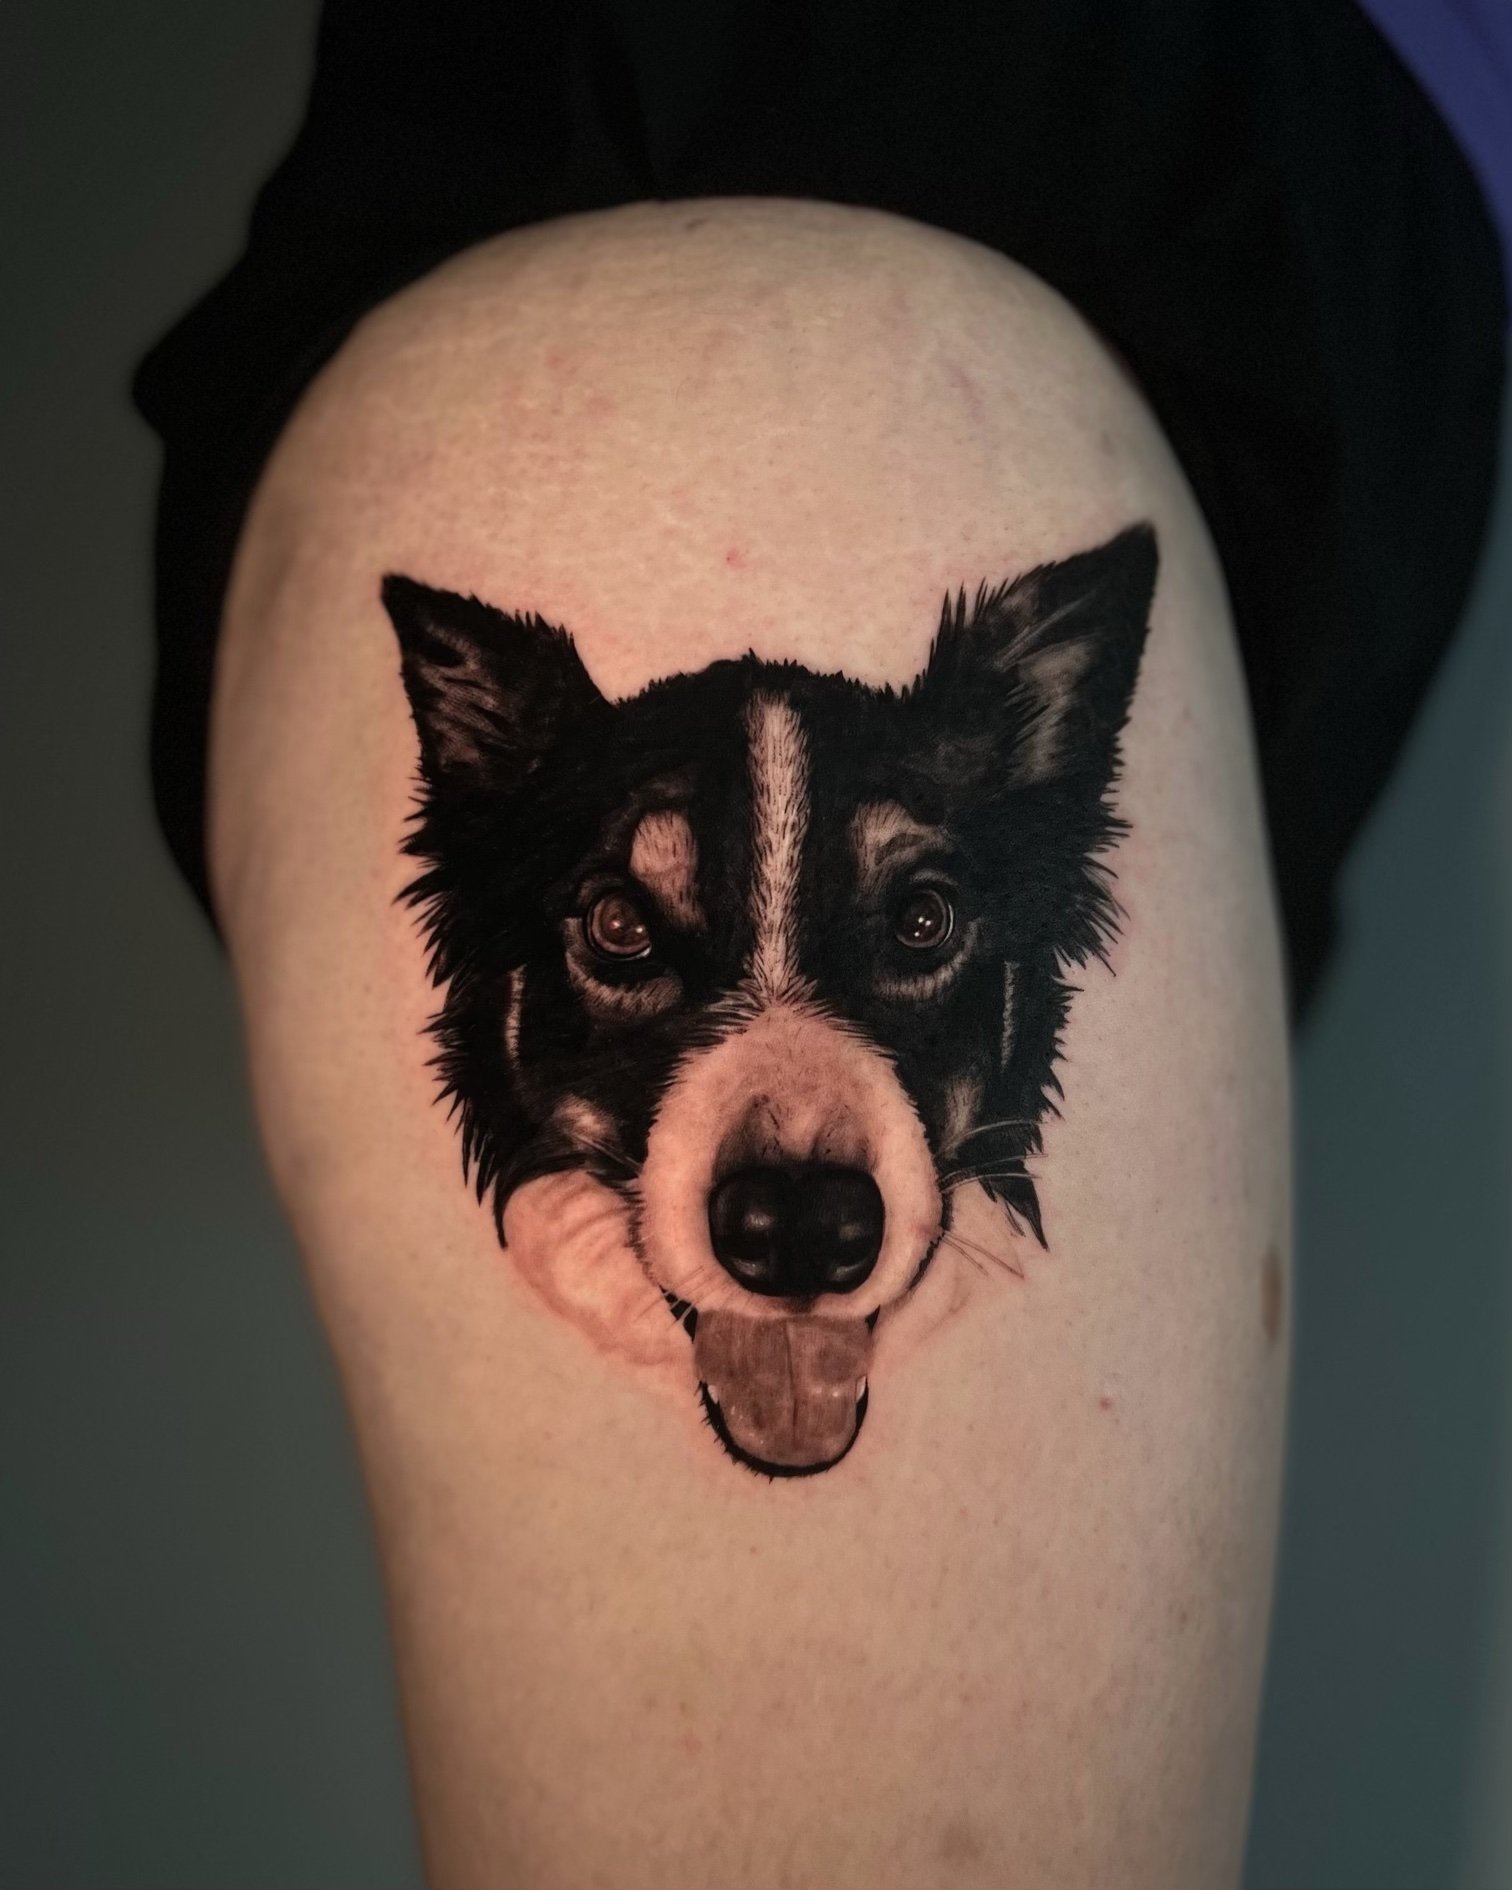 Fine line, realistic animal/plant tattoo artist recommendations? : r/Austin